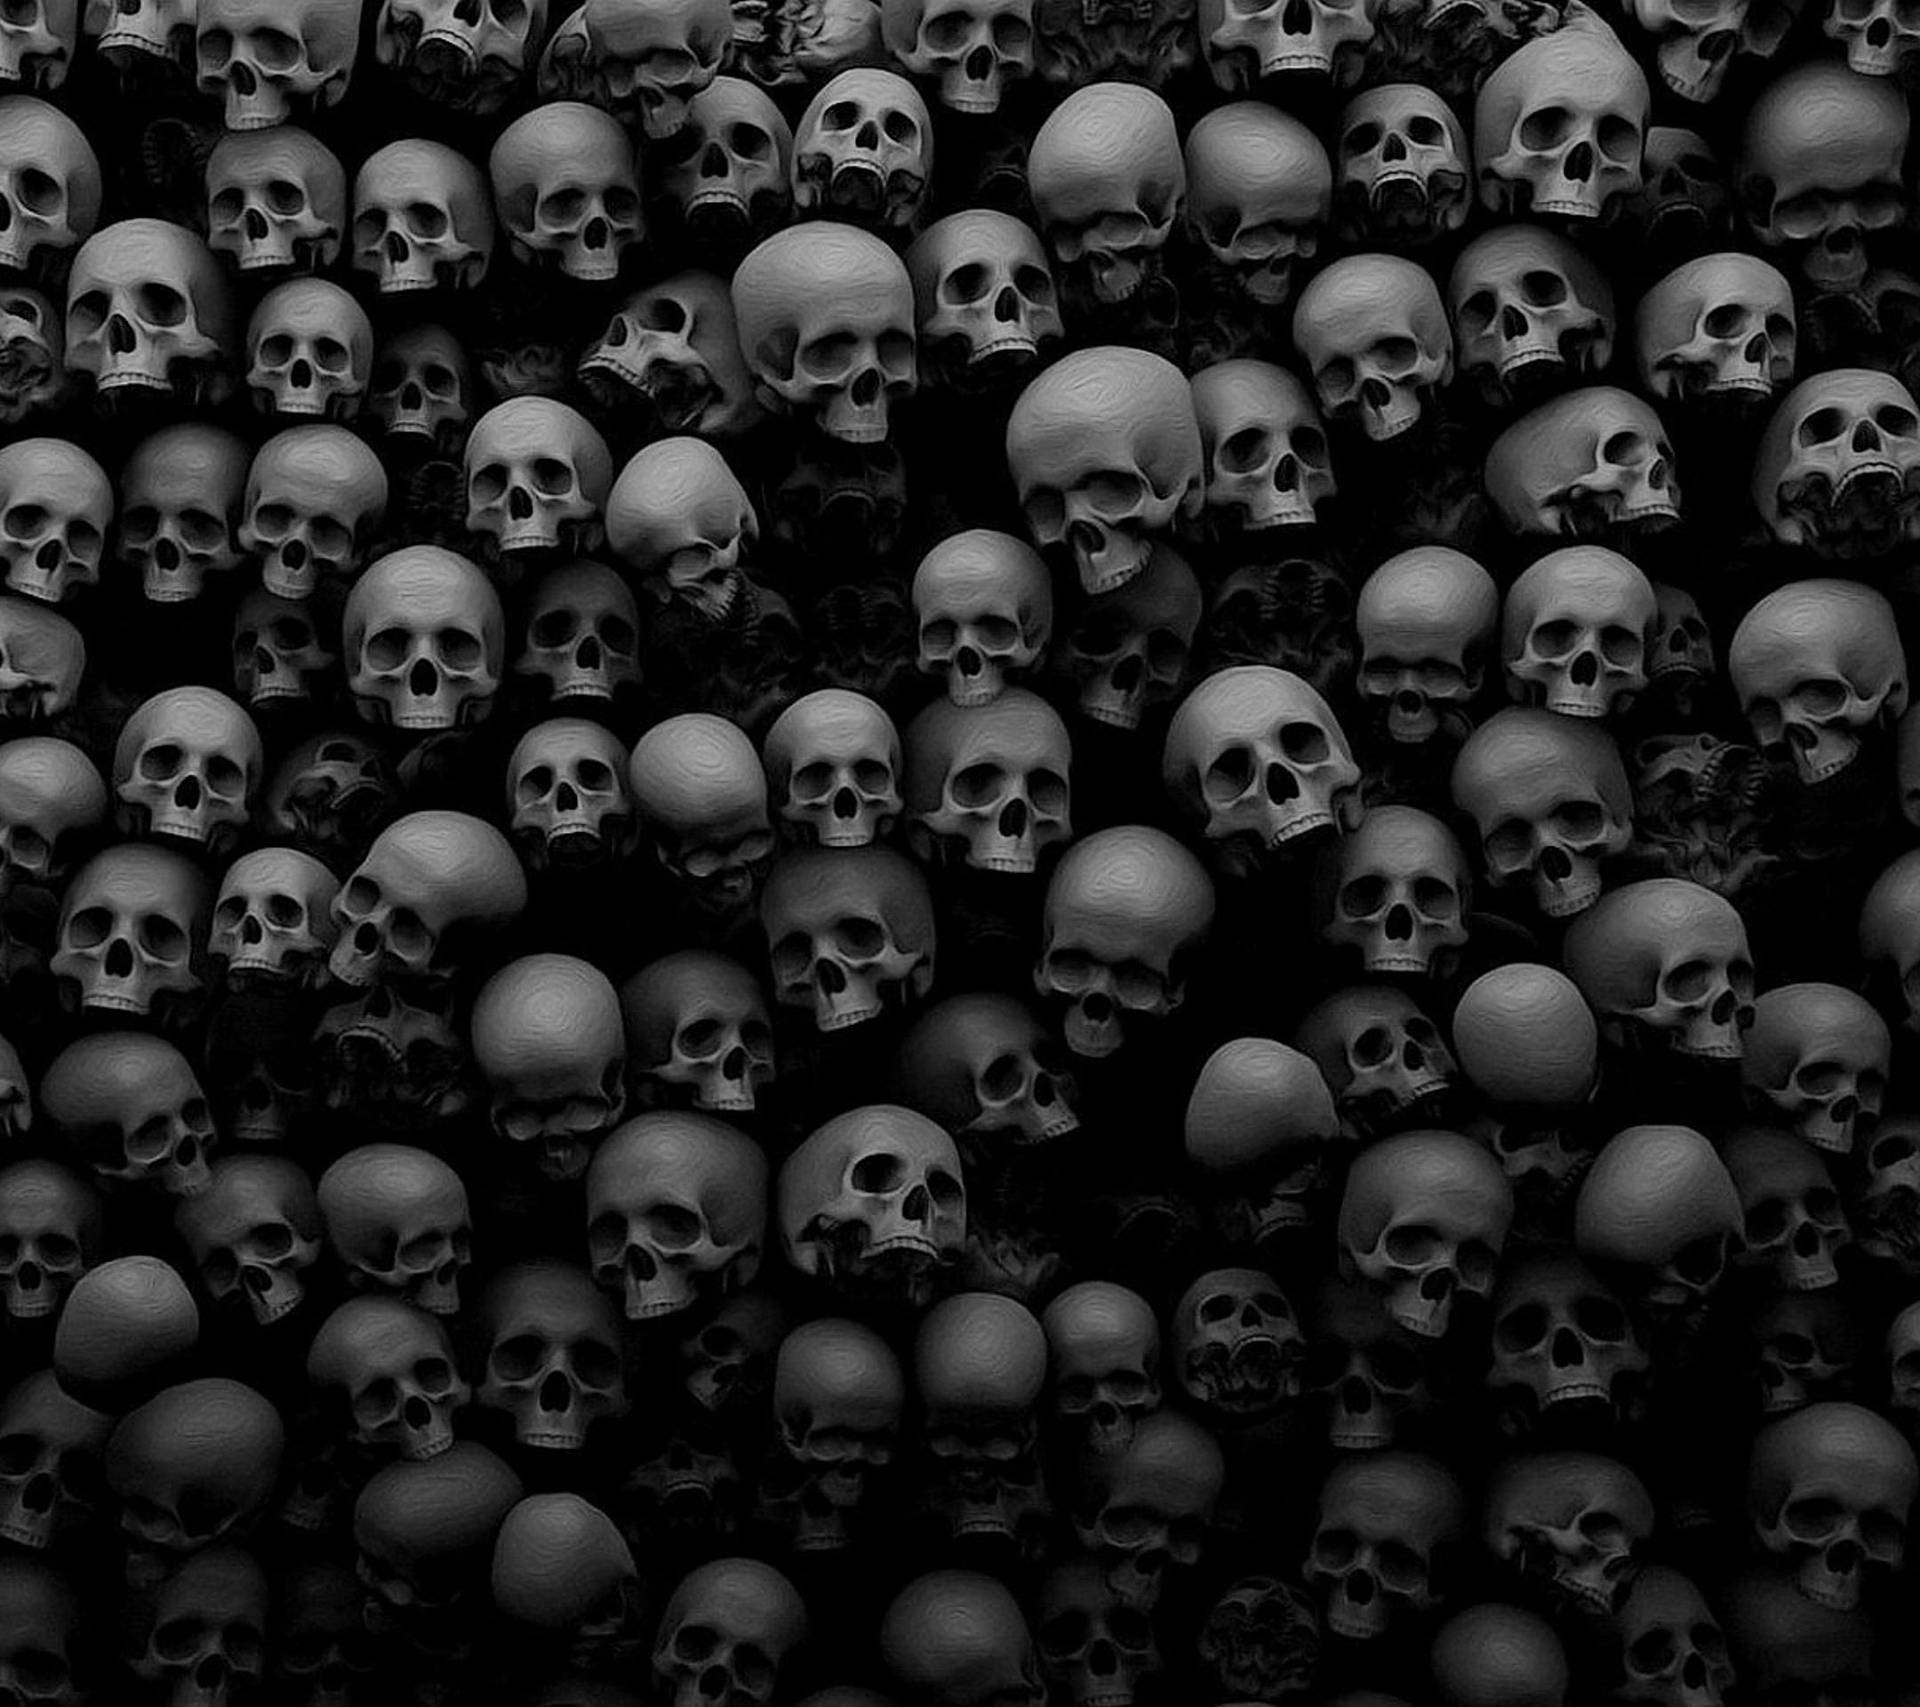 Tengkorak Wall Of Skulls